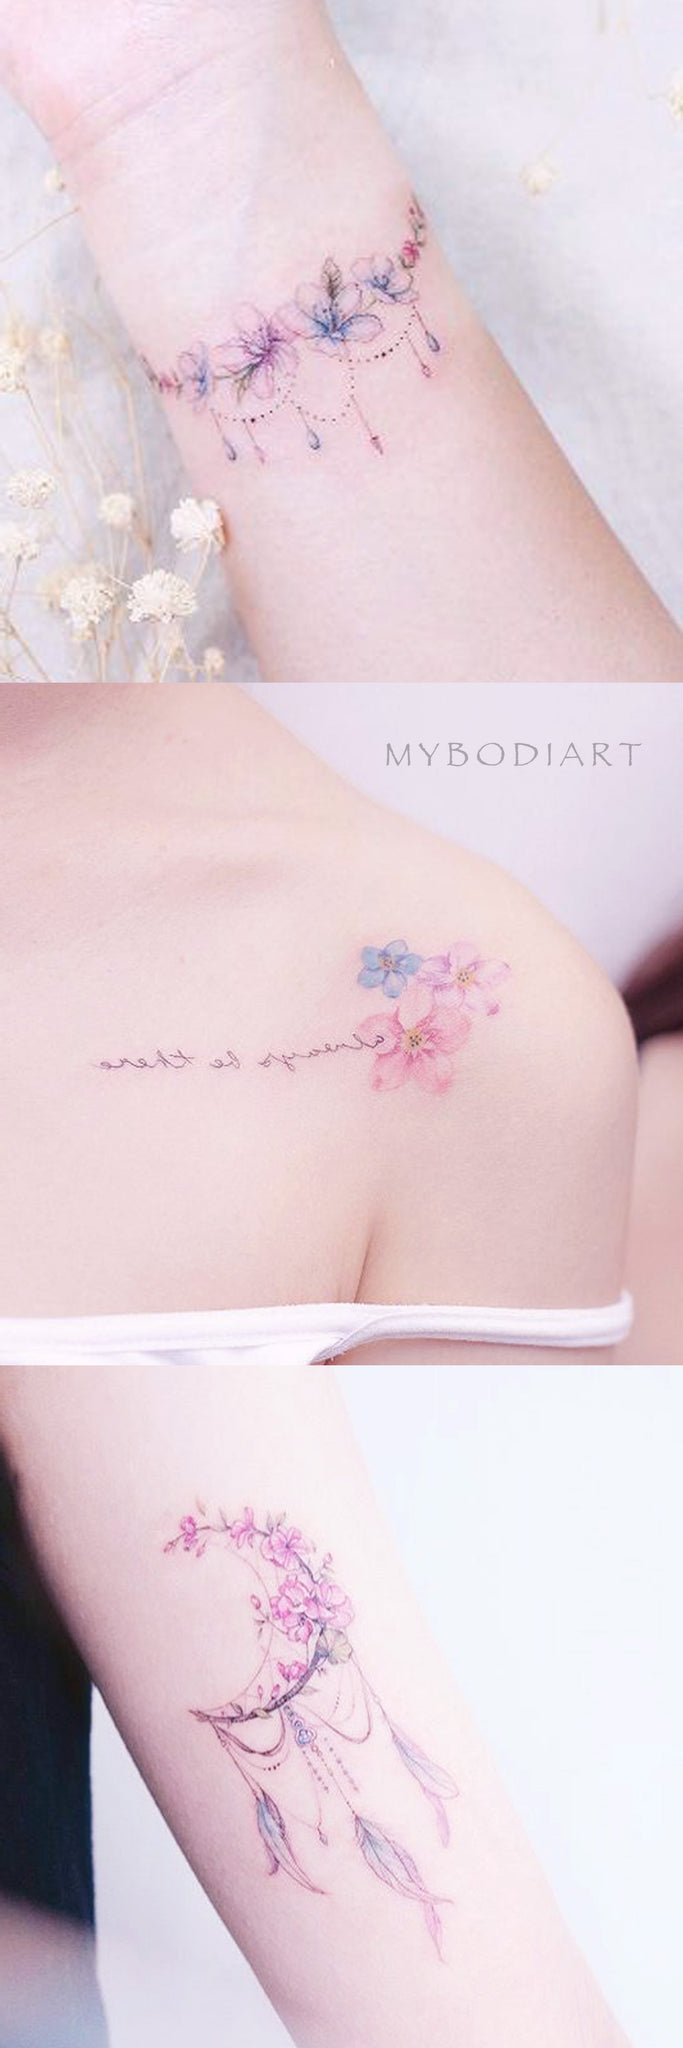 Cute Girly Watercolor Floral Flower Shoulder Wrist Tattoo Ideas for Women -  Ideas florales delicadas del tatuaje del hombro de la flor para mujeres - www.MyBodiArt.com 